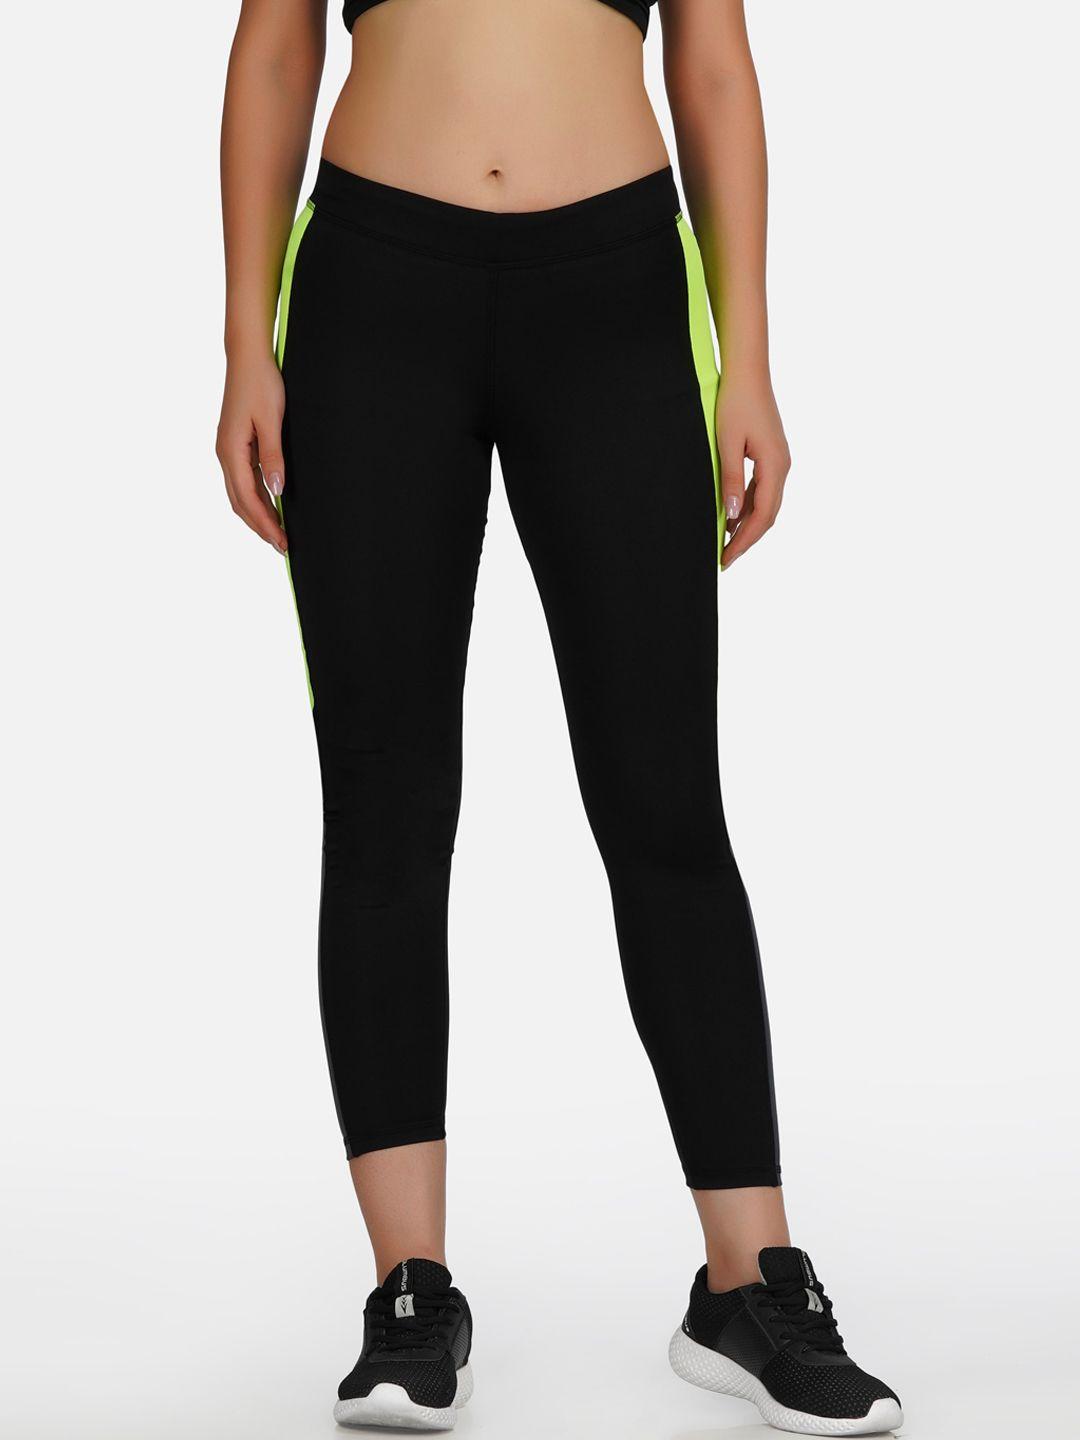 neu-look-fashion-women-black-&-florescent-green-colourblocked-gym-tights